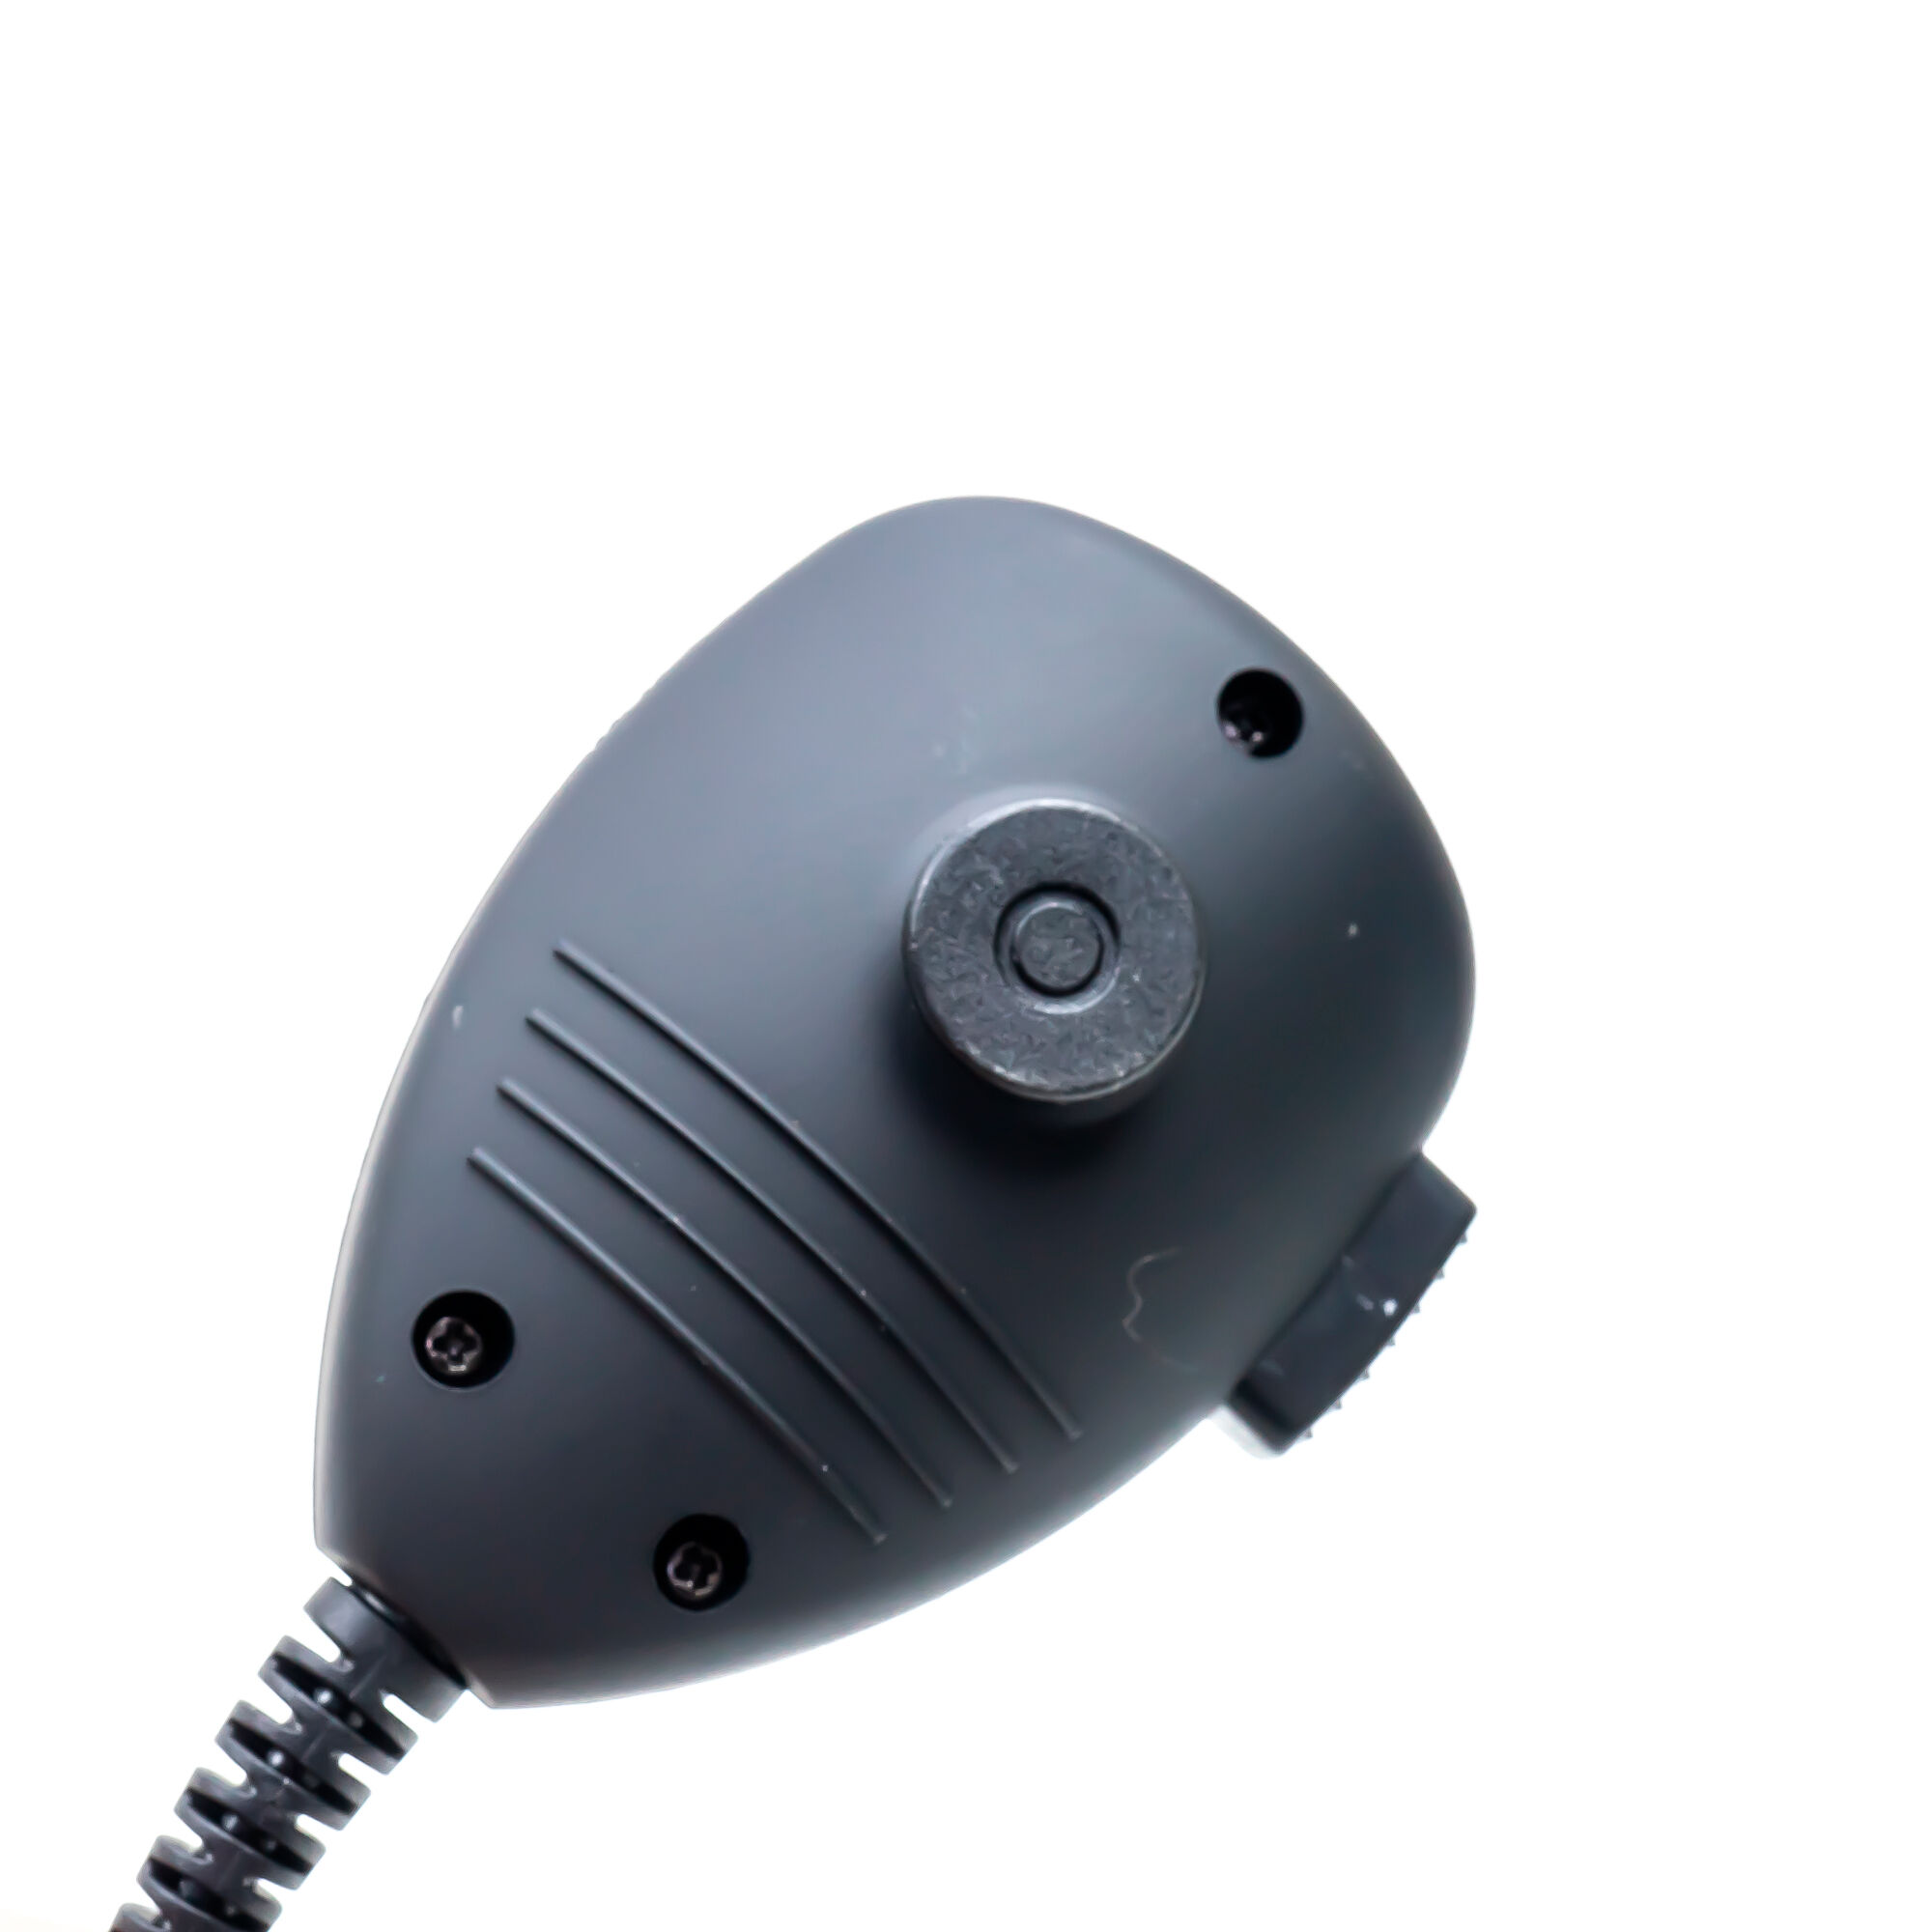 Ersatzmikrofon für CB-Funkgeräte PNI HP 6500 und PNI HP 7120 - Bild 3